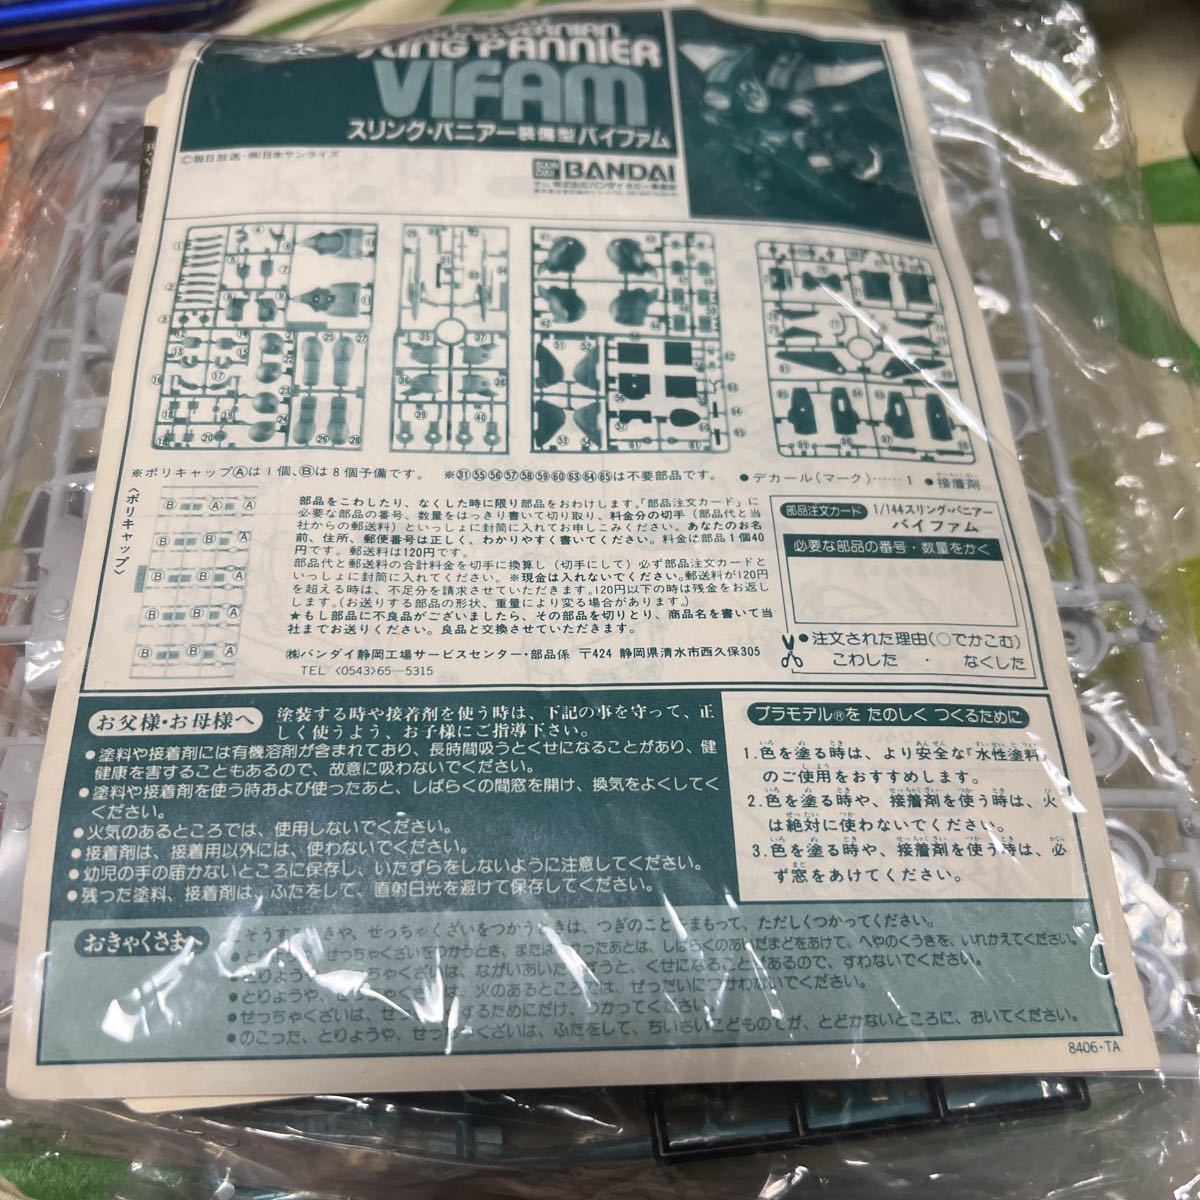  Ginga Hyouryuu Vifam 1/144 sling *bania- equipment type baifam Bandai plastic model 